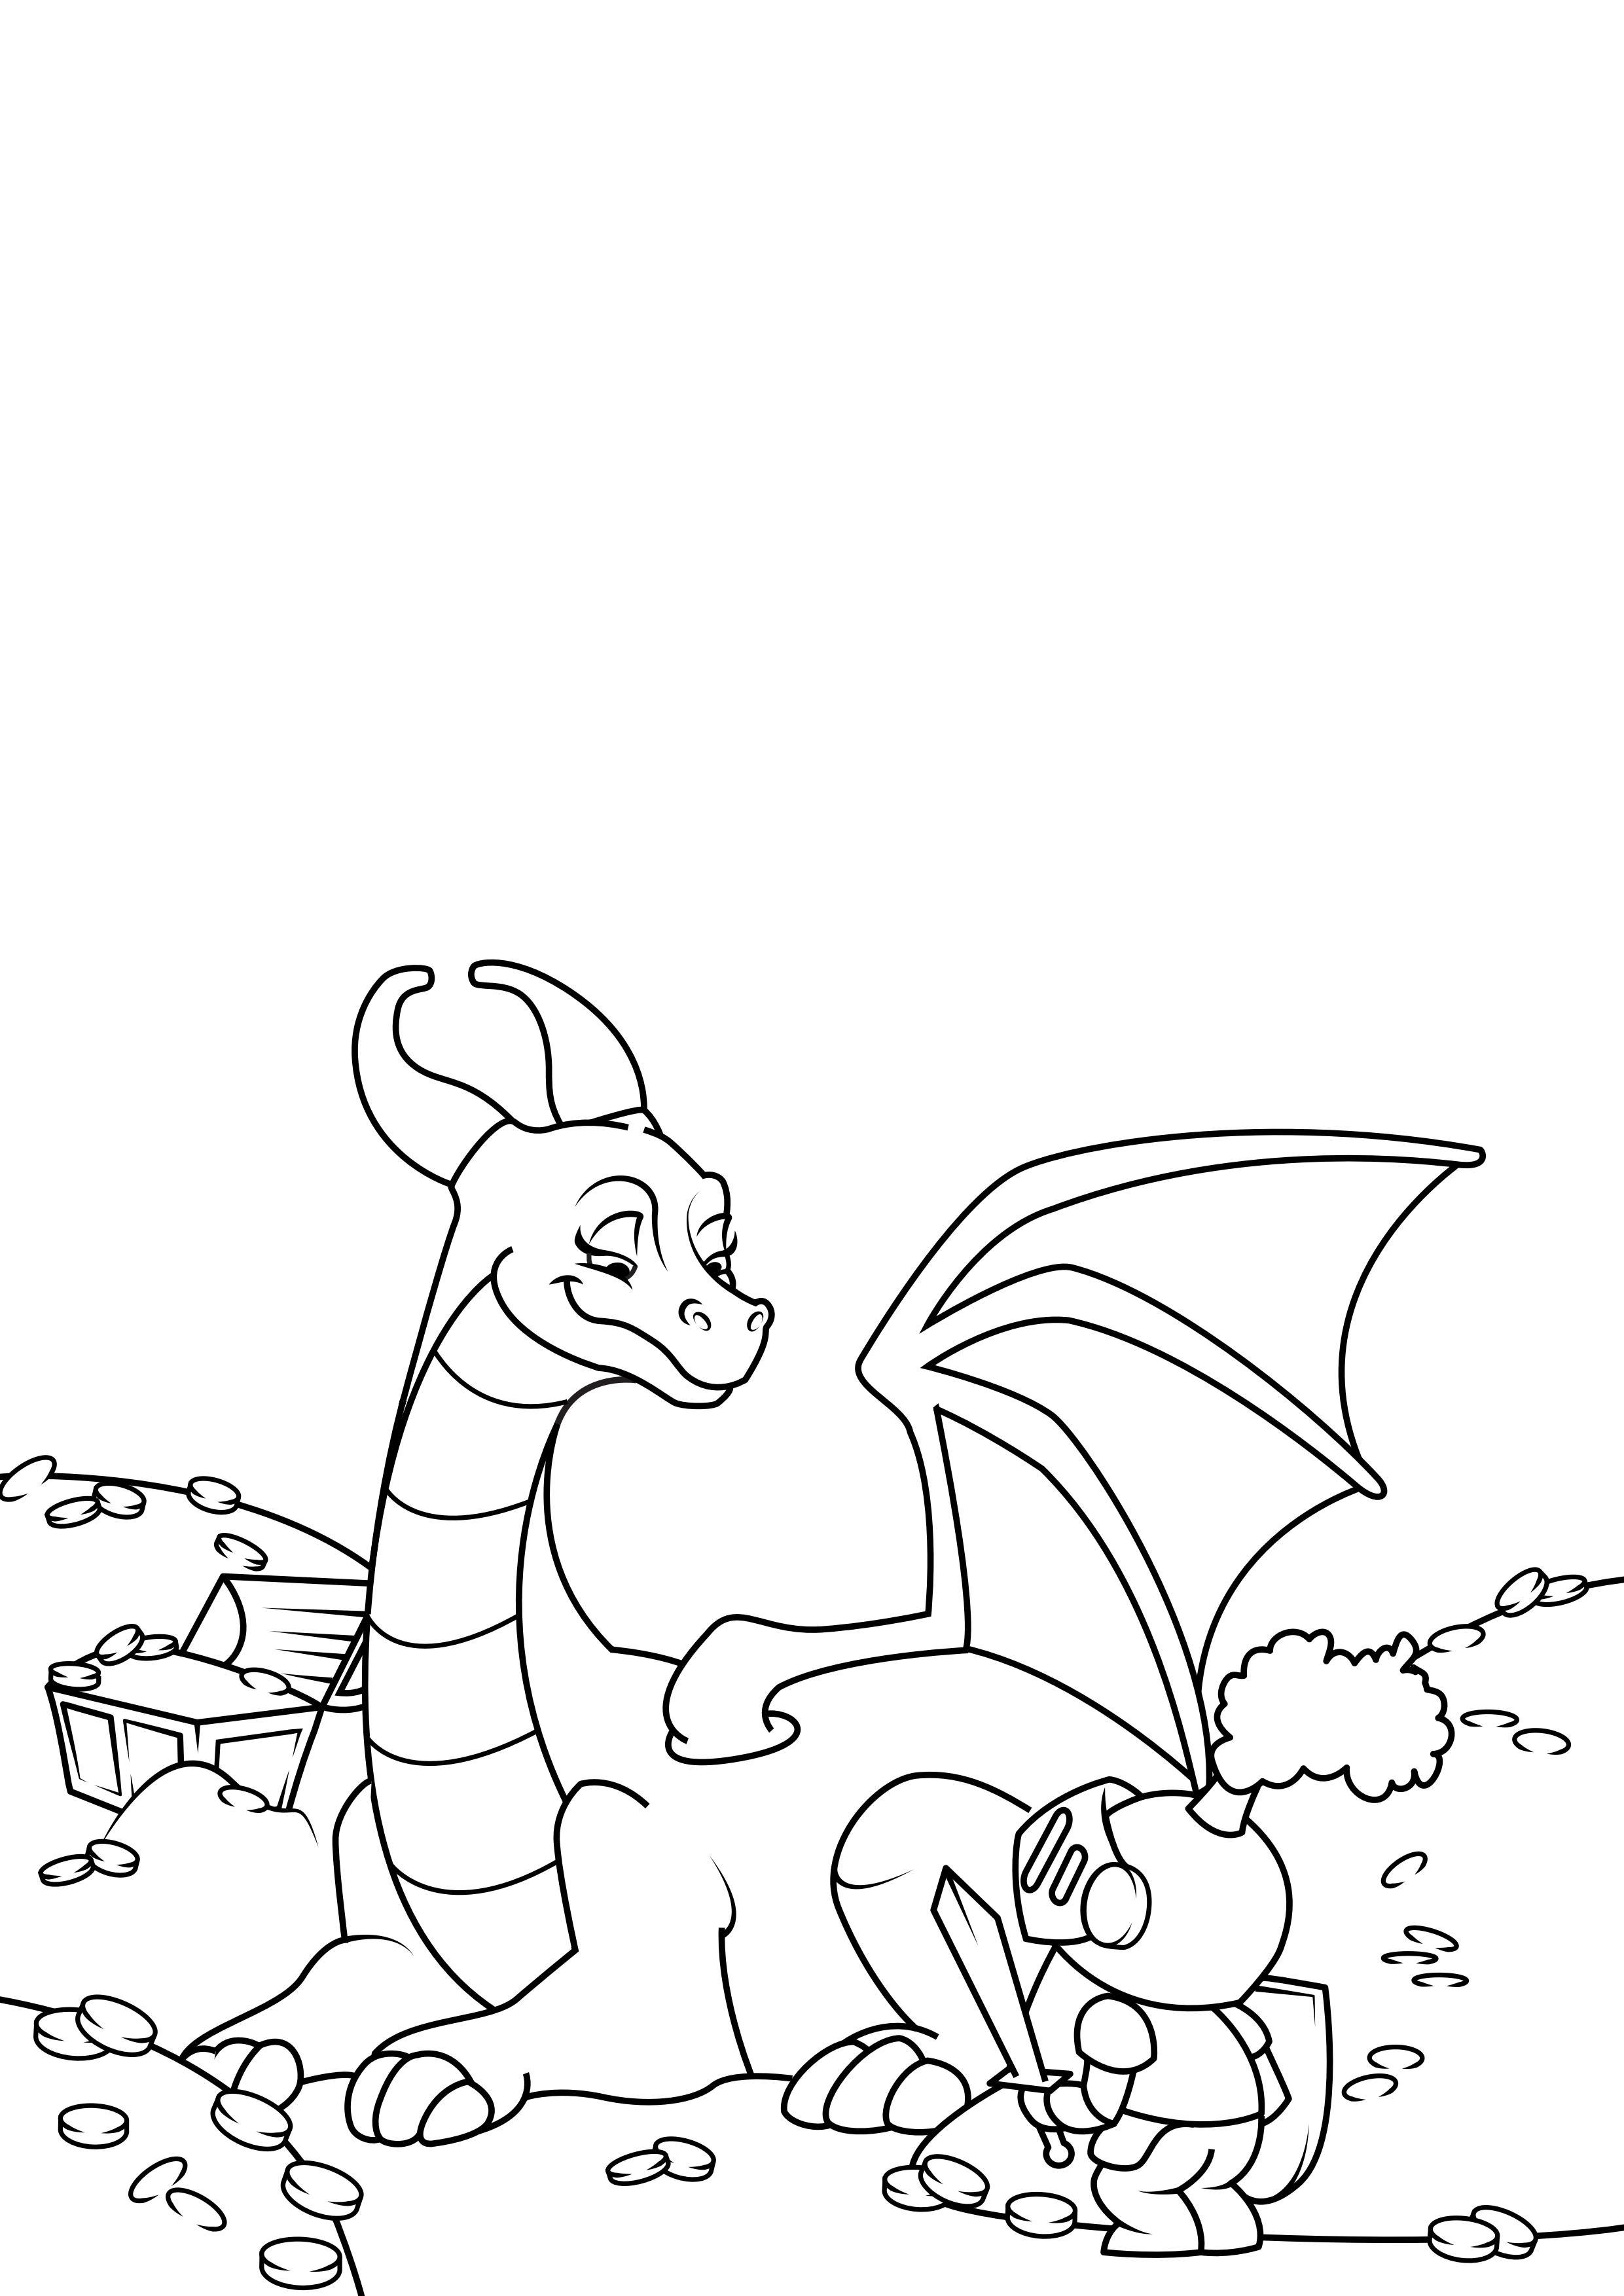 Coloring page dragon protects treasure